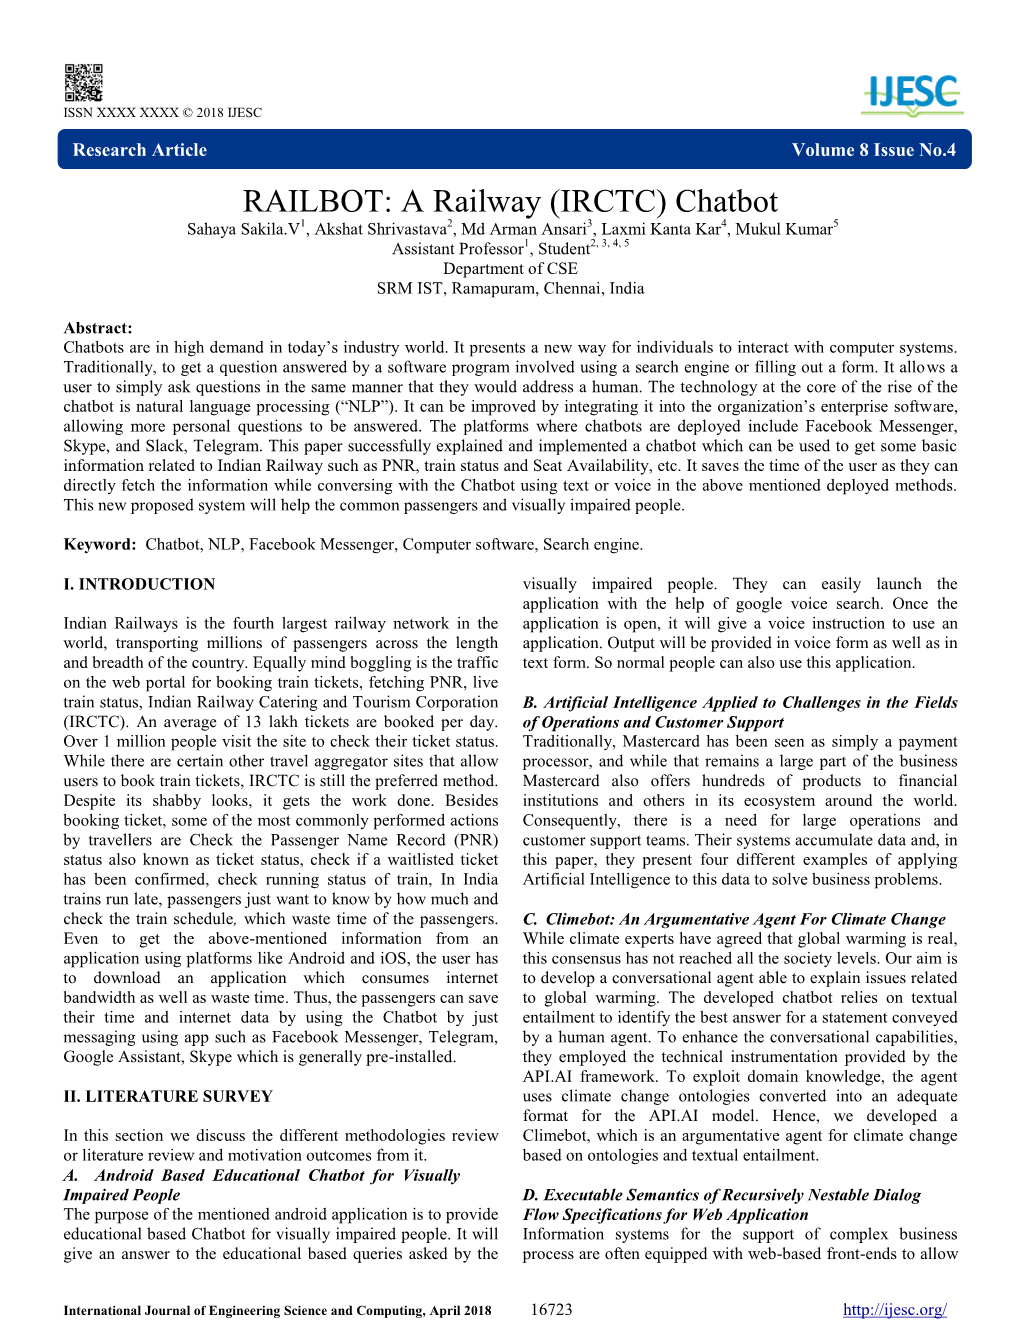 RAILBOT: a Railway (IRCTC) Chatbot